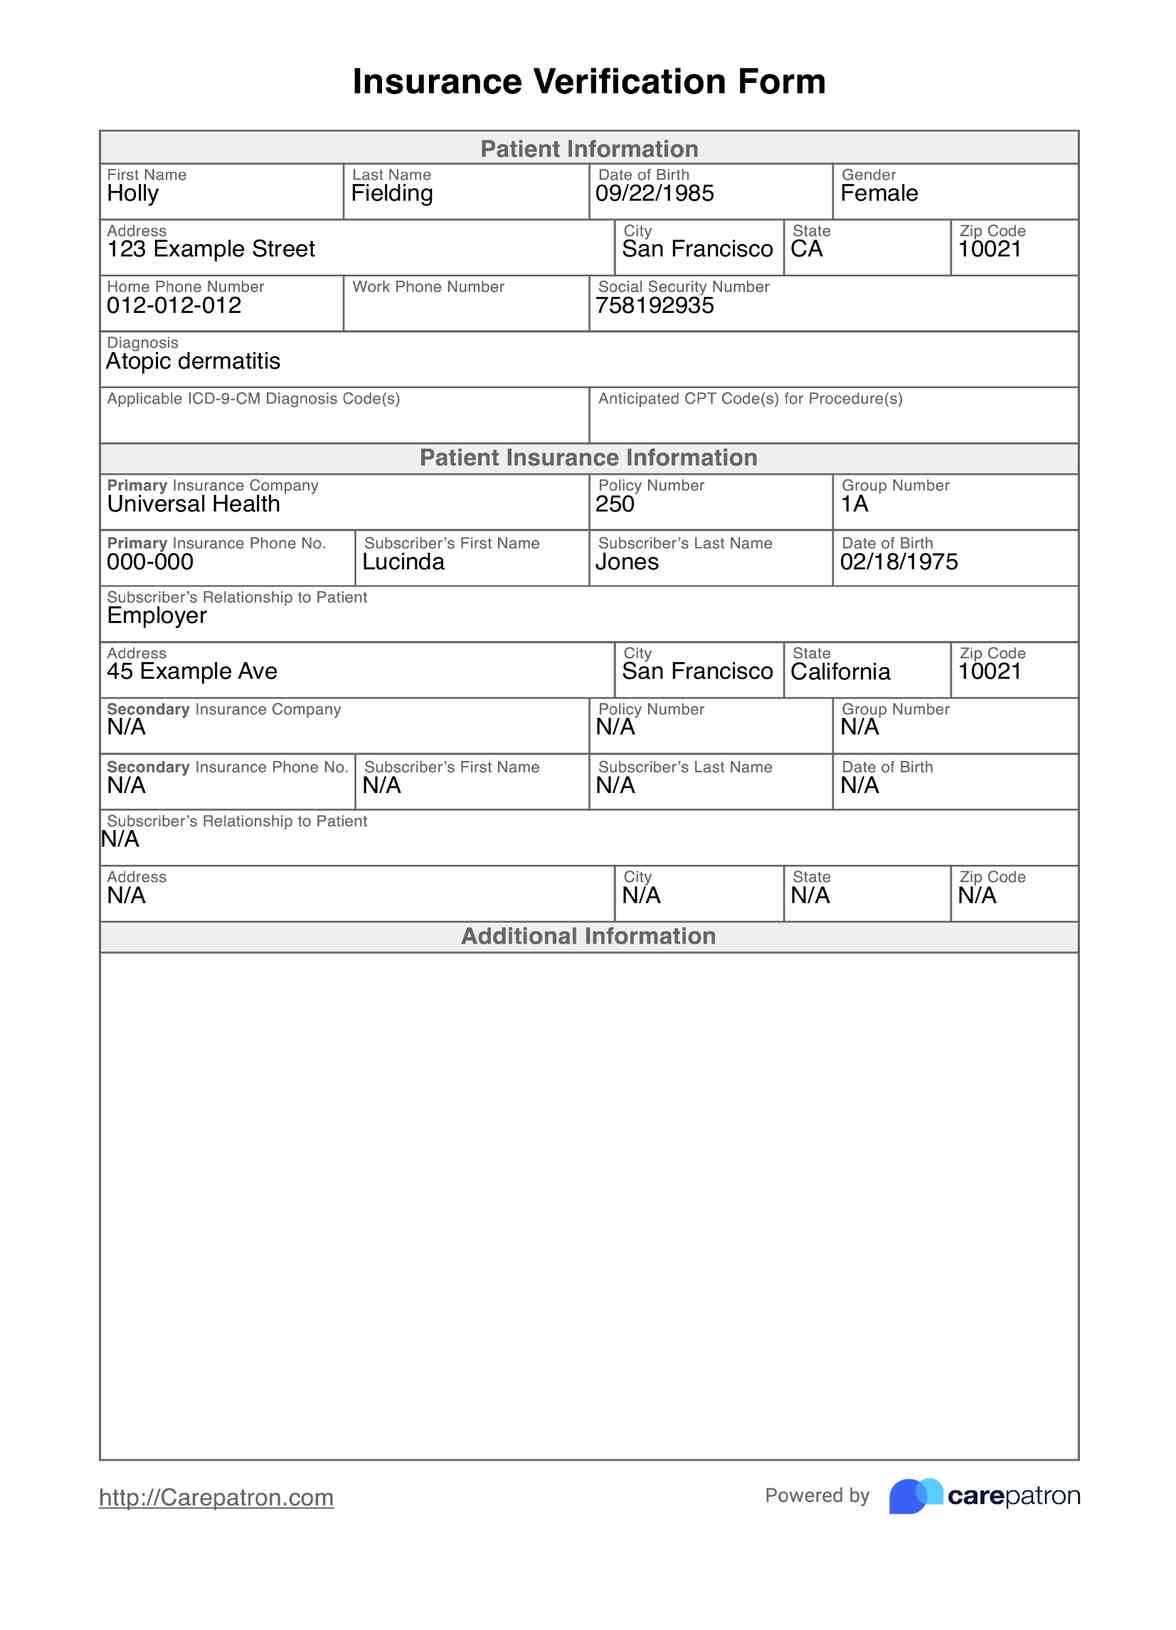 Insurance Verification Form PDF Example